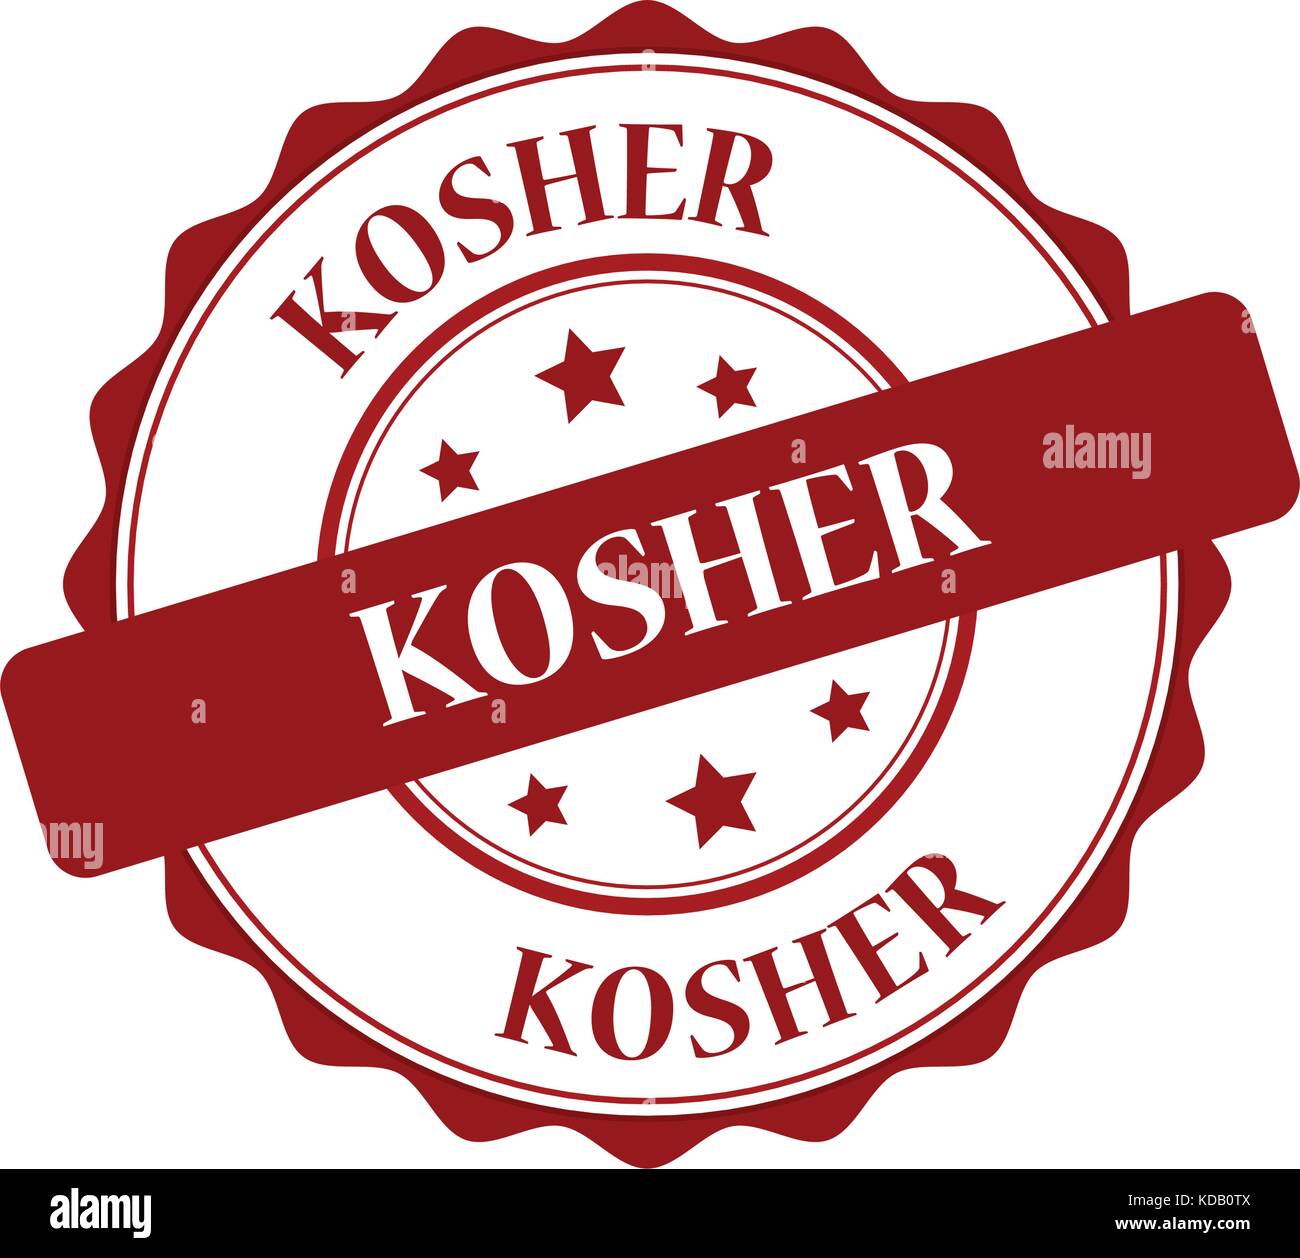 Kosher red stamp illustration Stock Vector